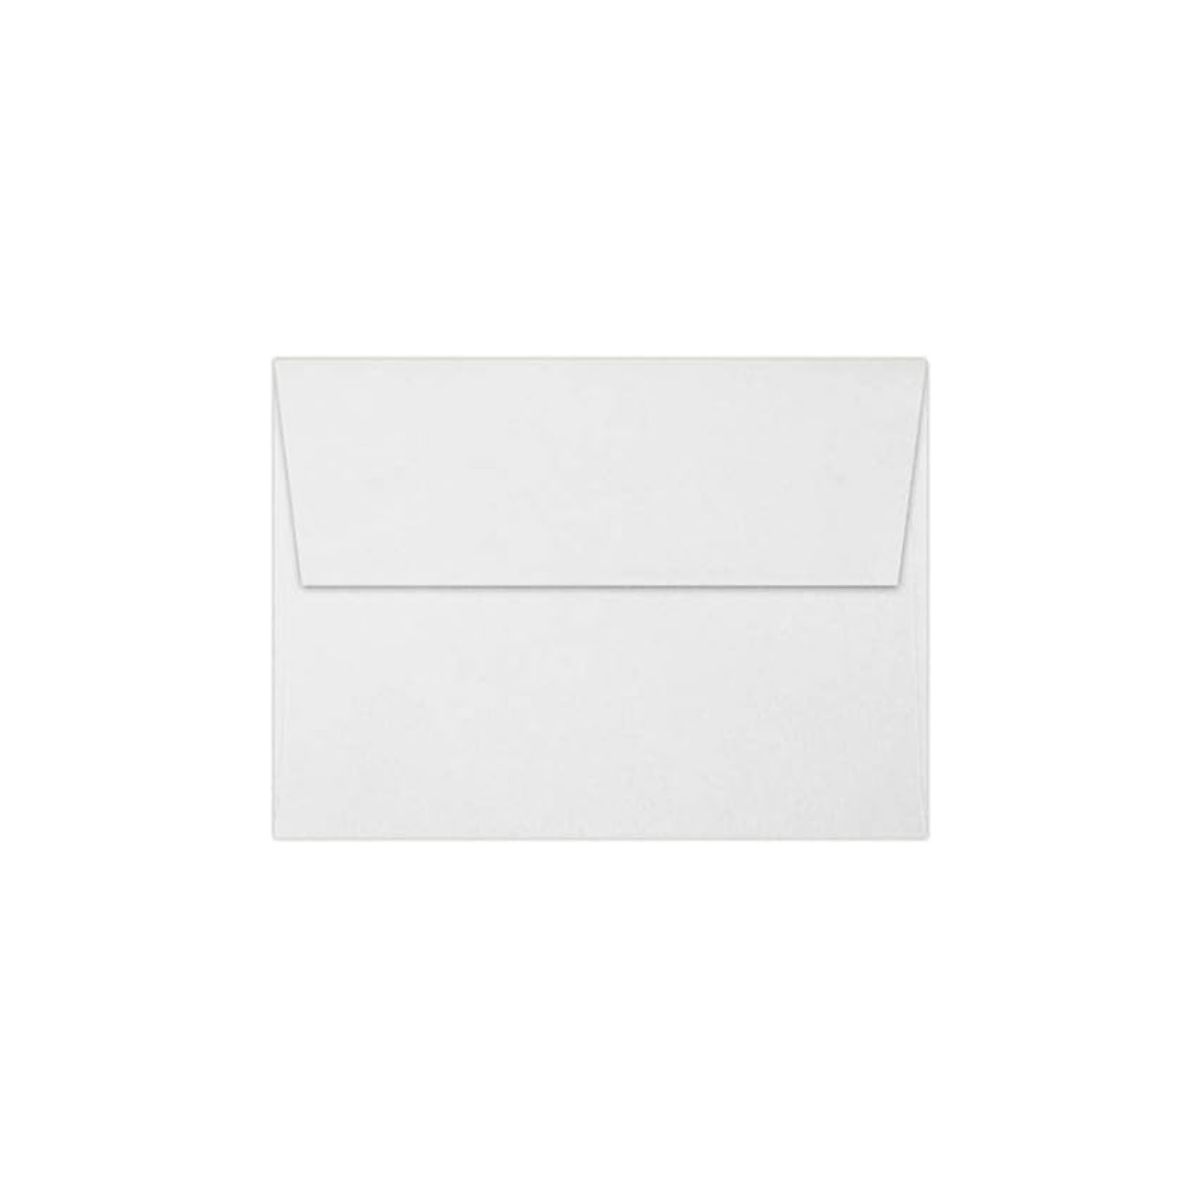 Reskid A9 Envelopes, 70lb Premium Opaque Text - 5.5x8.5 Envelopes for Invitations, Printable Invitation Envelopes, Envelopes for Weddings, Invitations, Photos, Postcards, Greeting Cards 1000 Count